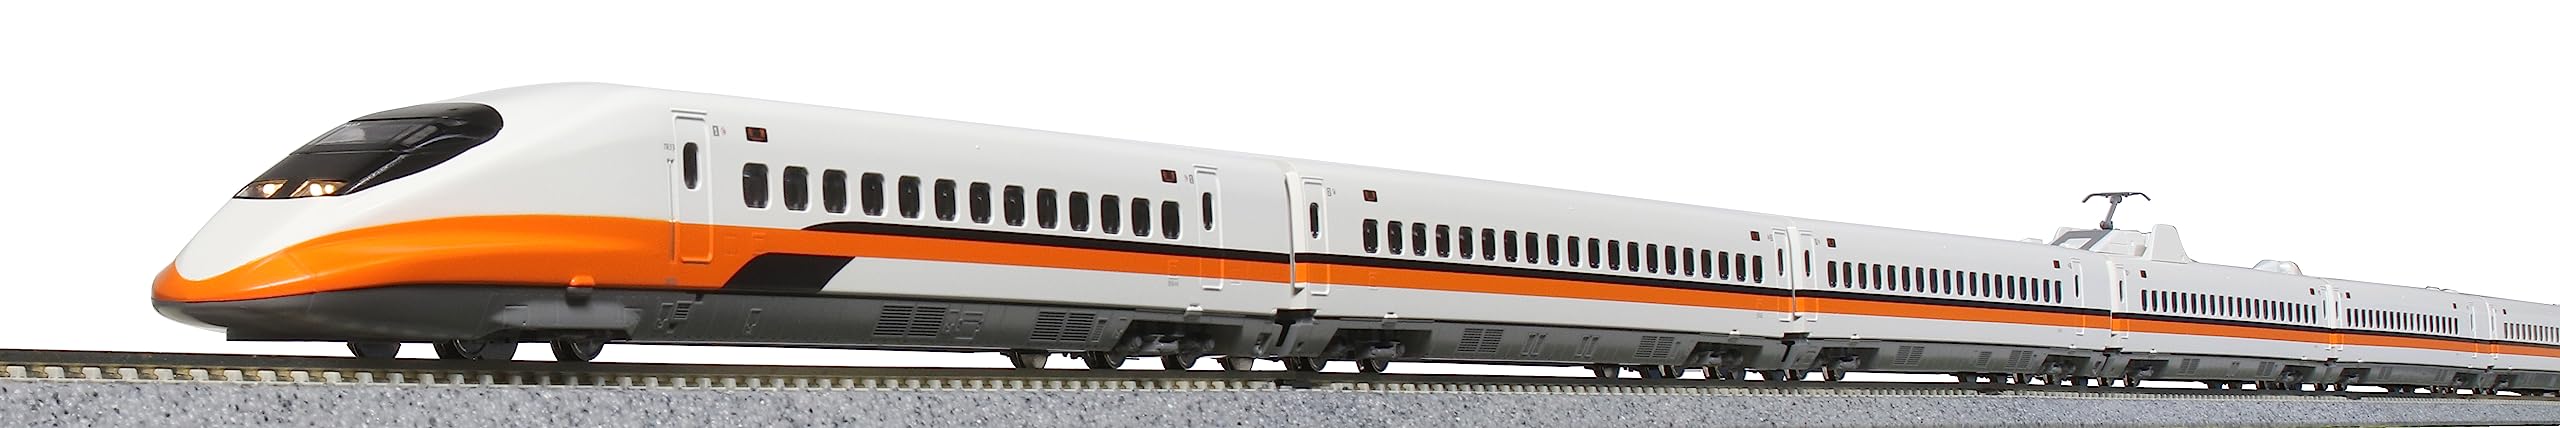 Kato High-Speed Rail 700T 6-Car Basic Set Model 10-1616 Taiwan Edition